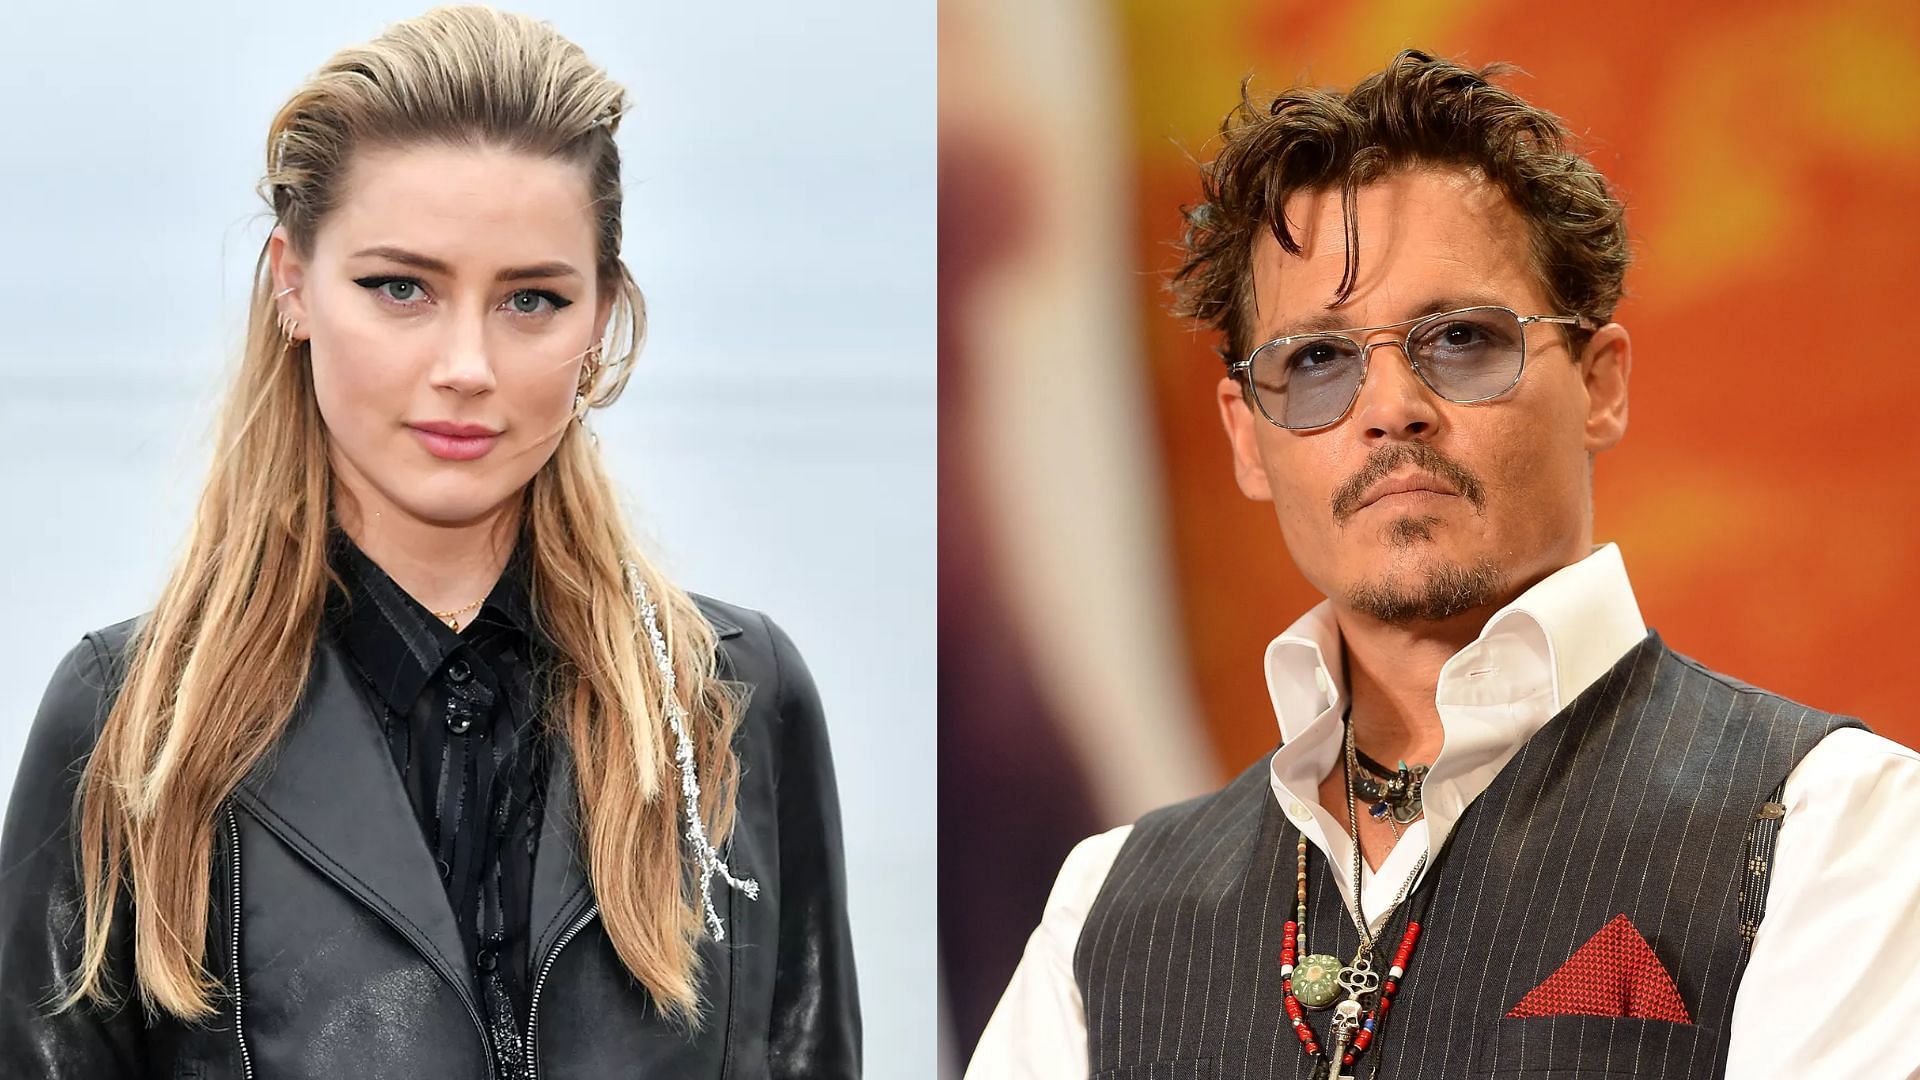 Amber Heard announces that she will settle the defamation case against Johnny Depp (Image via Getty/Atsushi Tomura and Neilson Barnard)